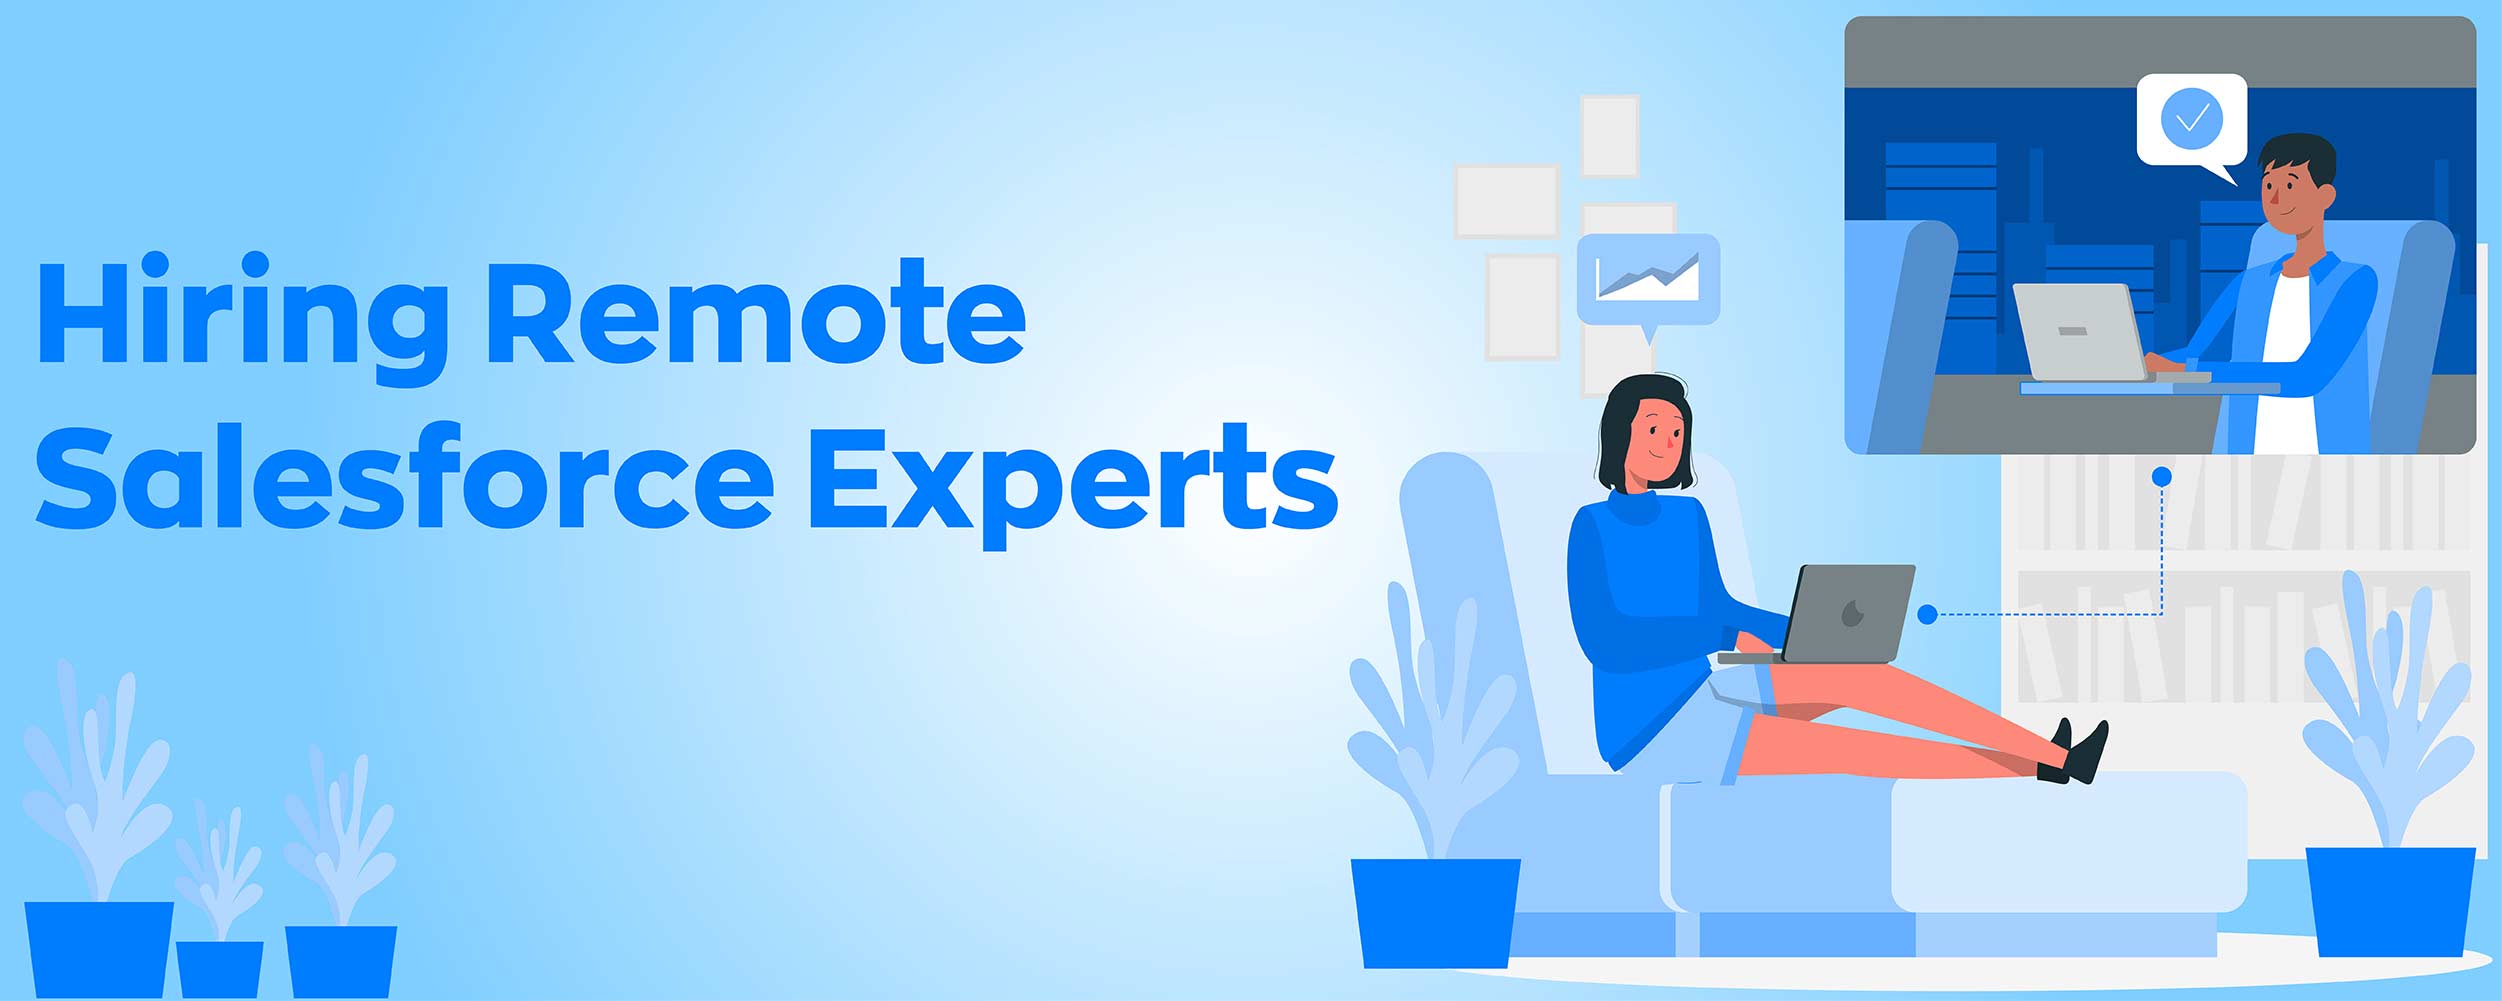 Hiring Remote Salesforce Experts